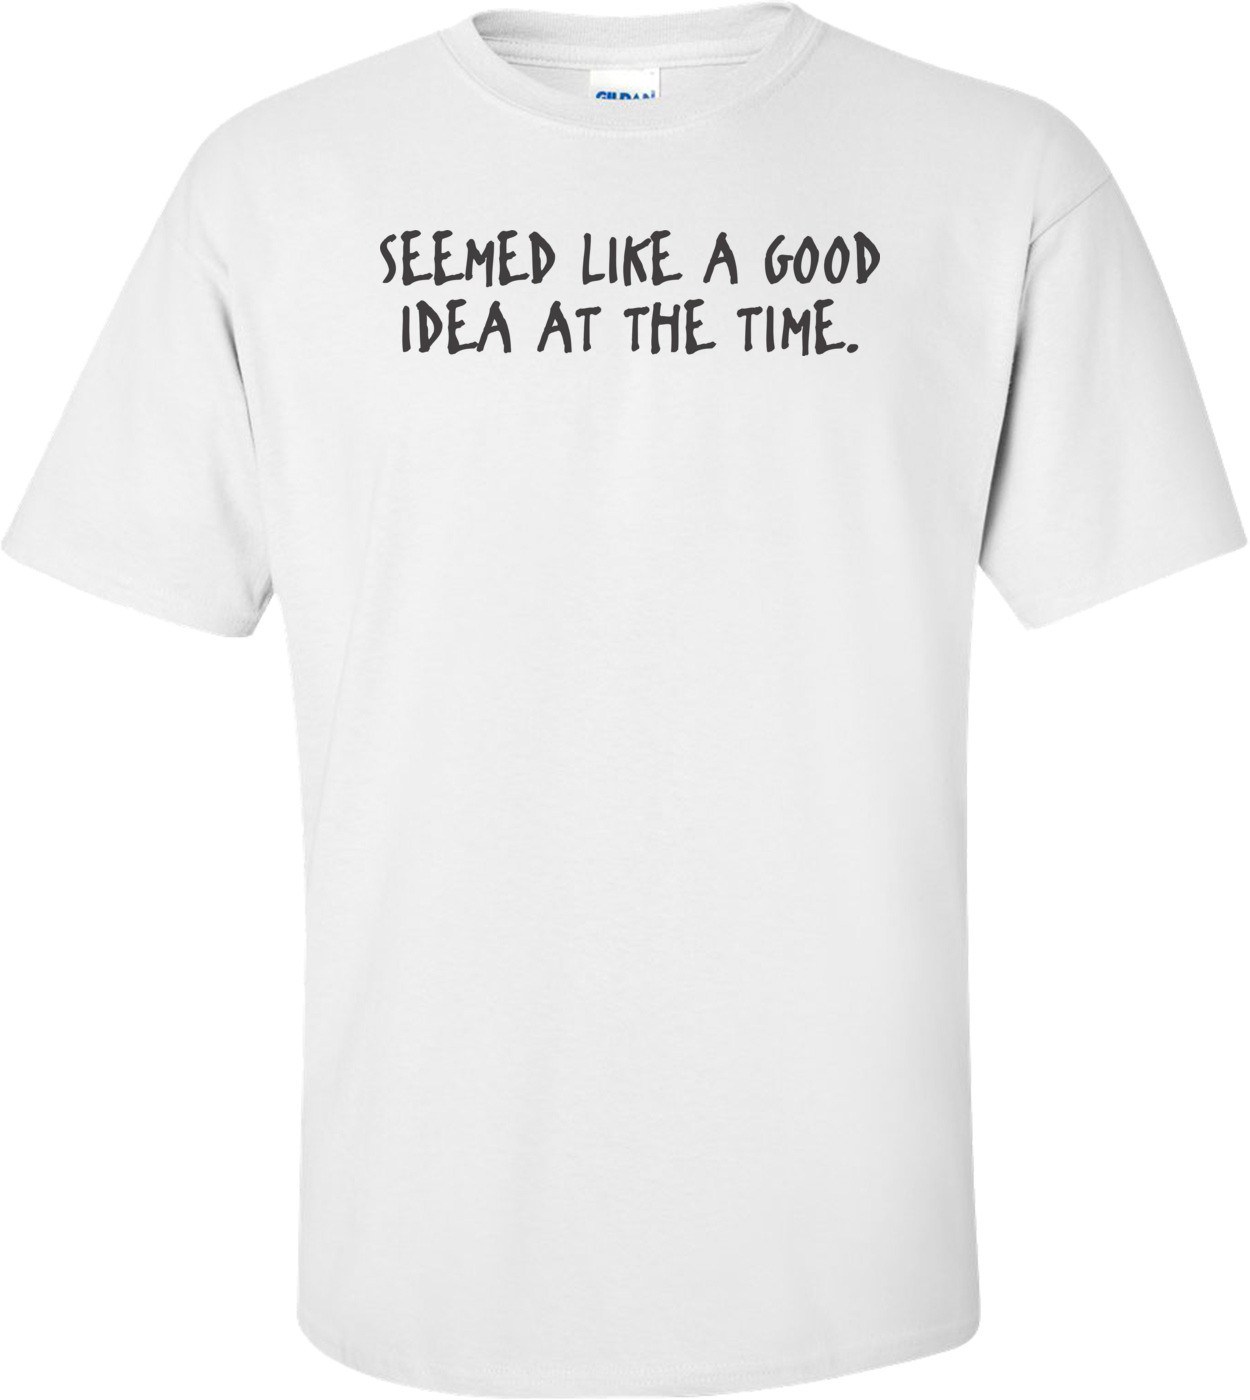 Seemed Like A Good Idea At The Time T-shirt 